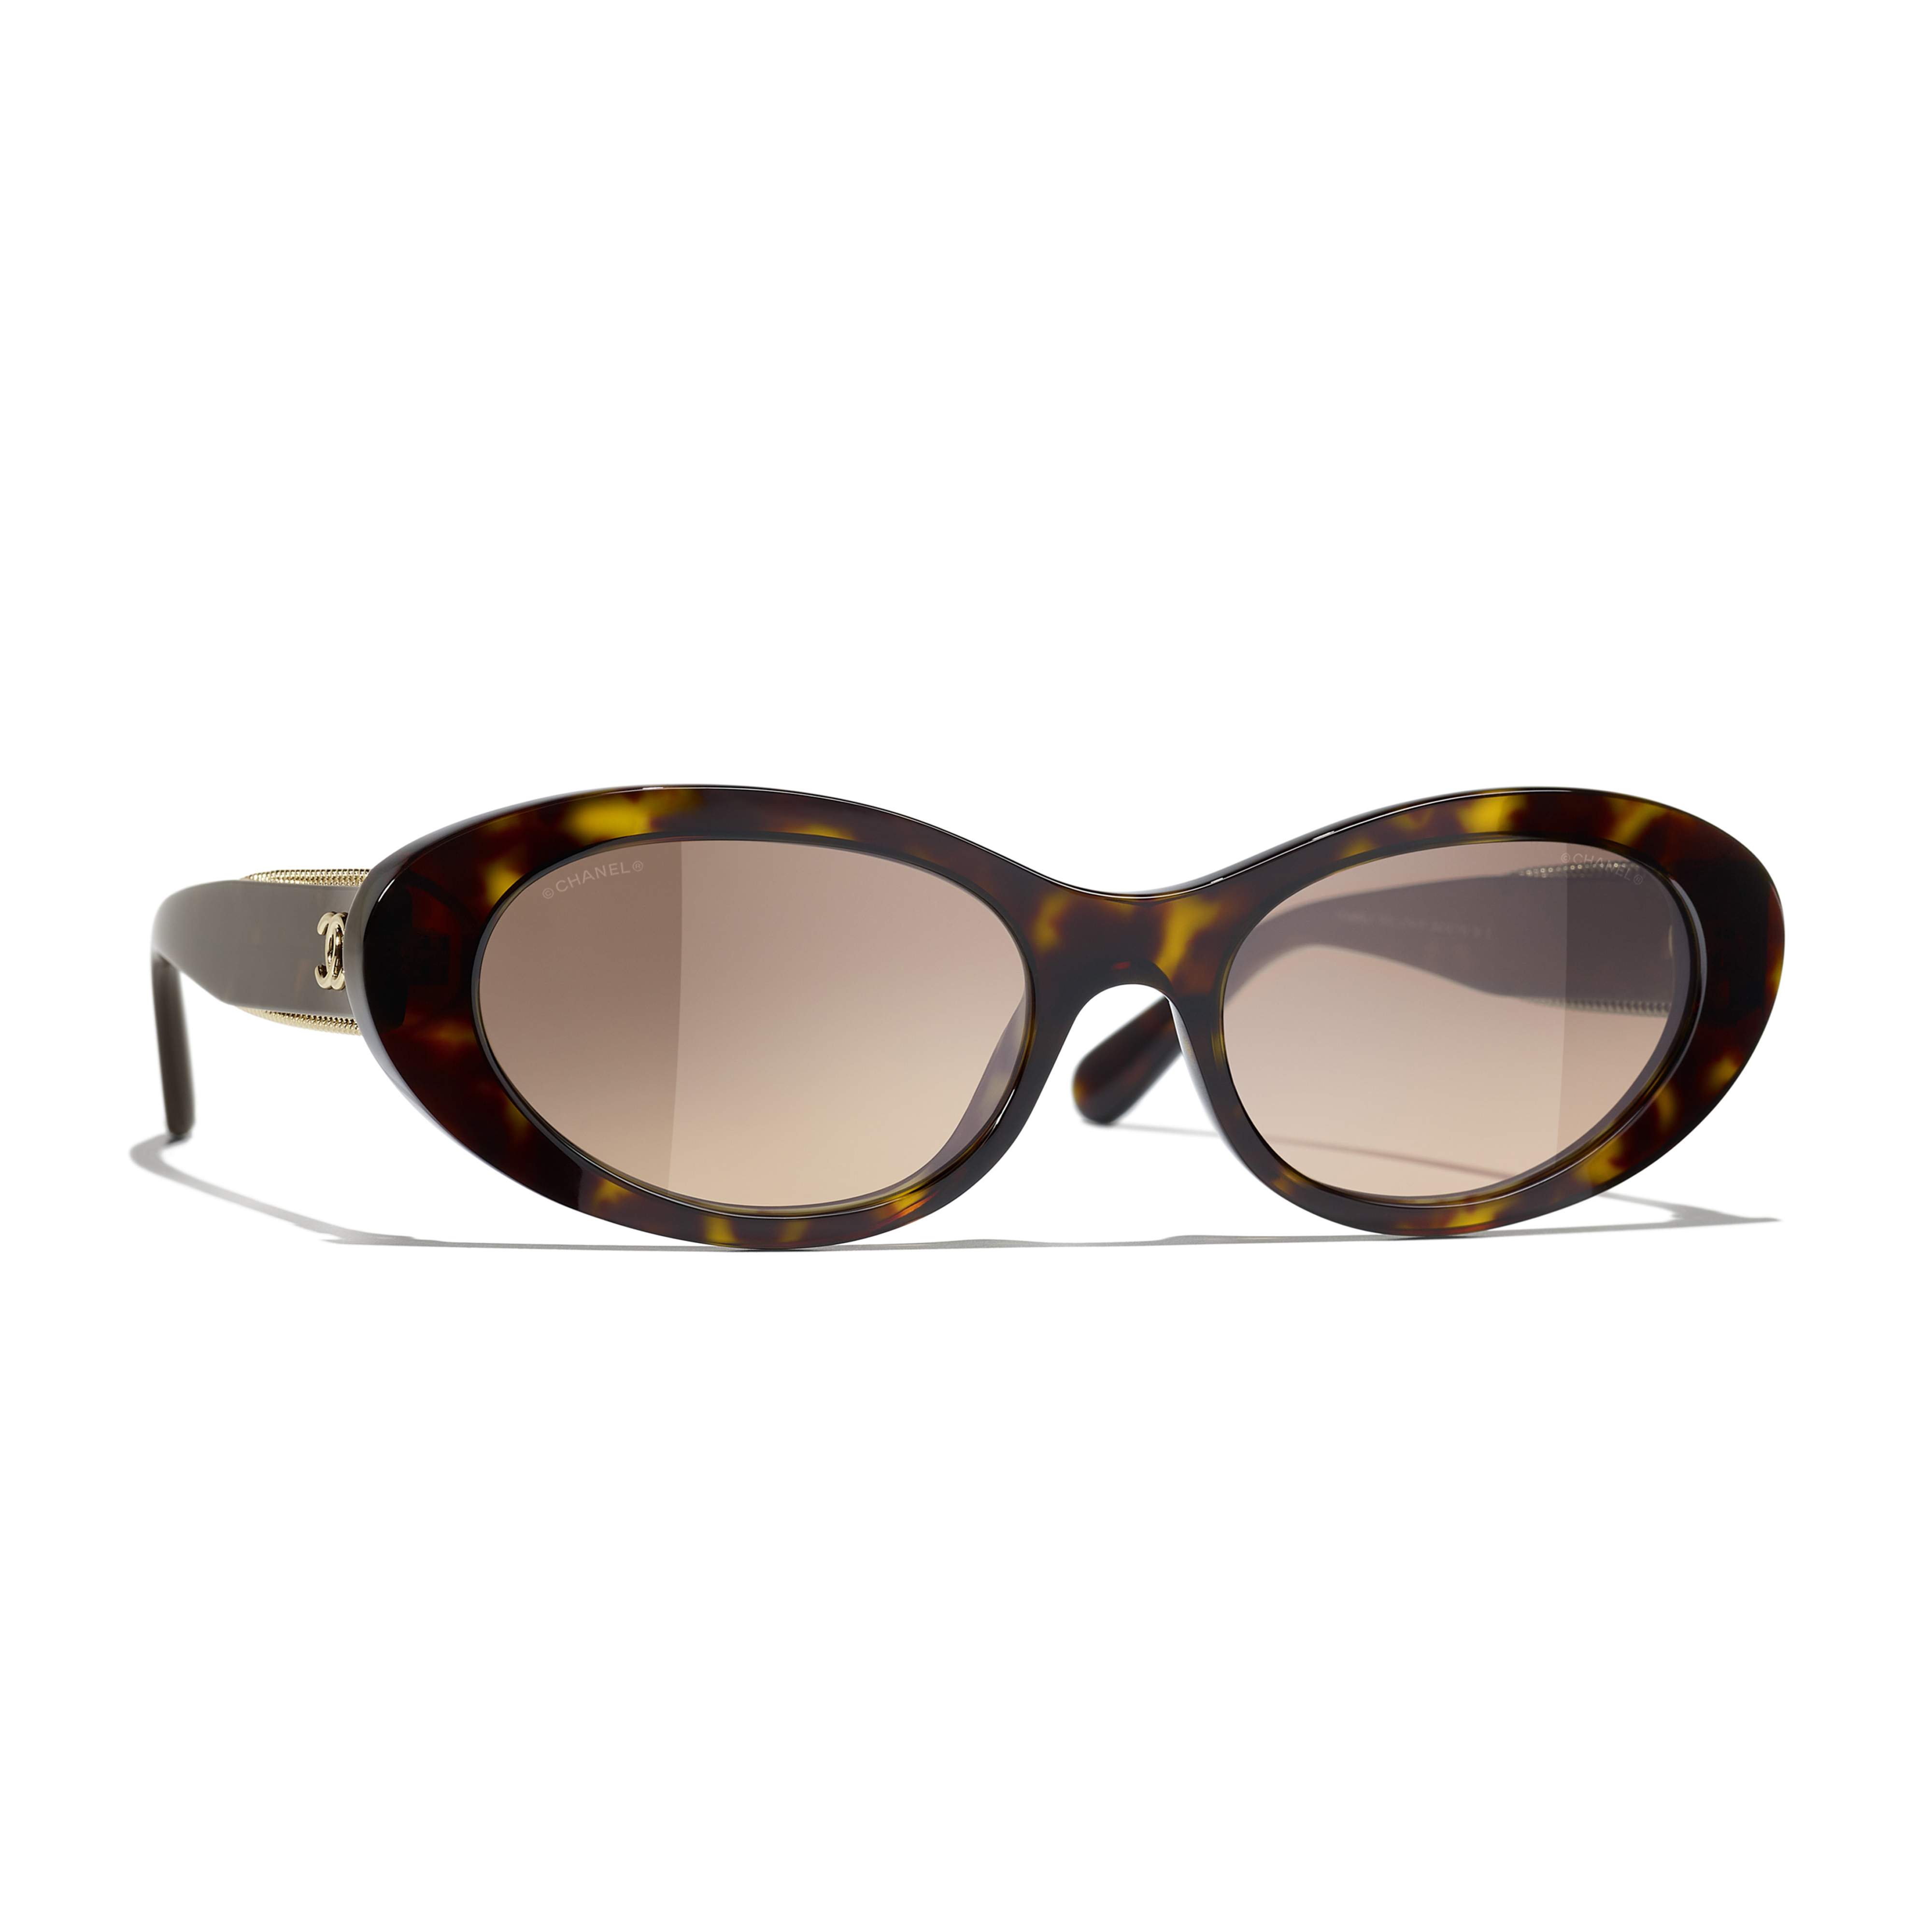 Sunglasses CHANEL CH5515 C71451 54-18 Dark havana in stock | Price